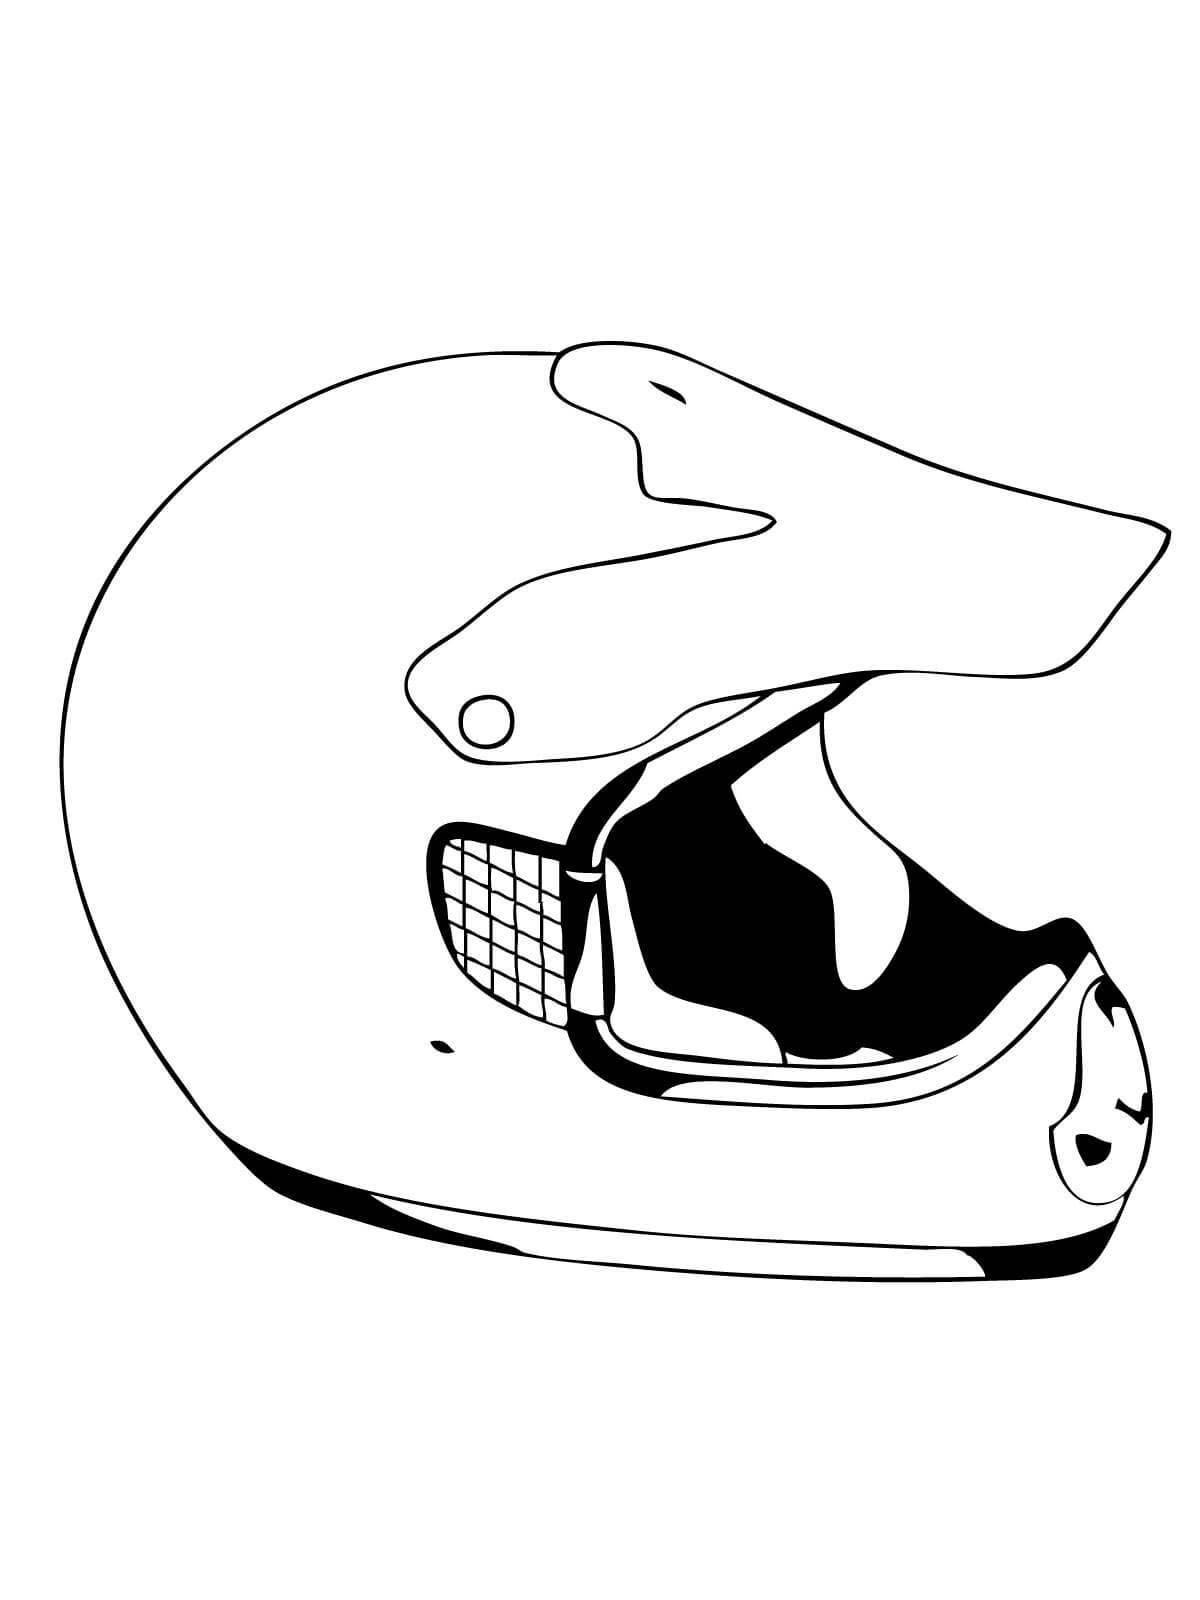 Coloring page invigorating motorcycle helmet